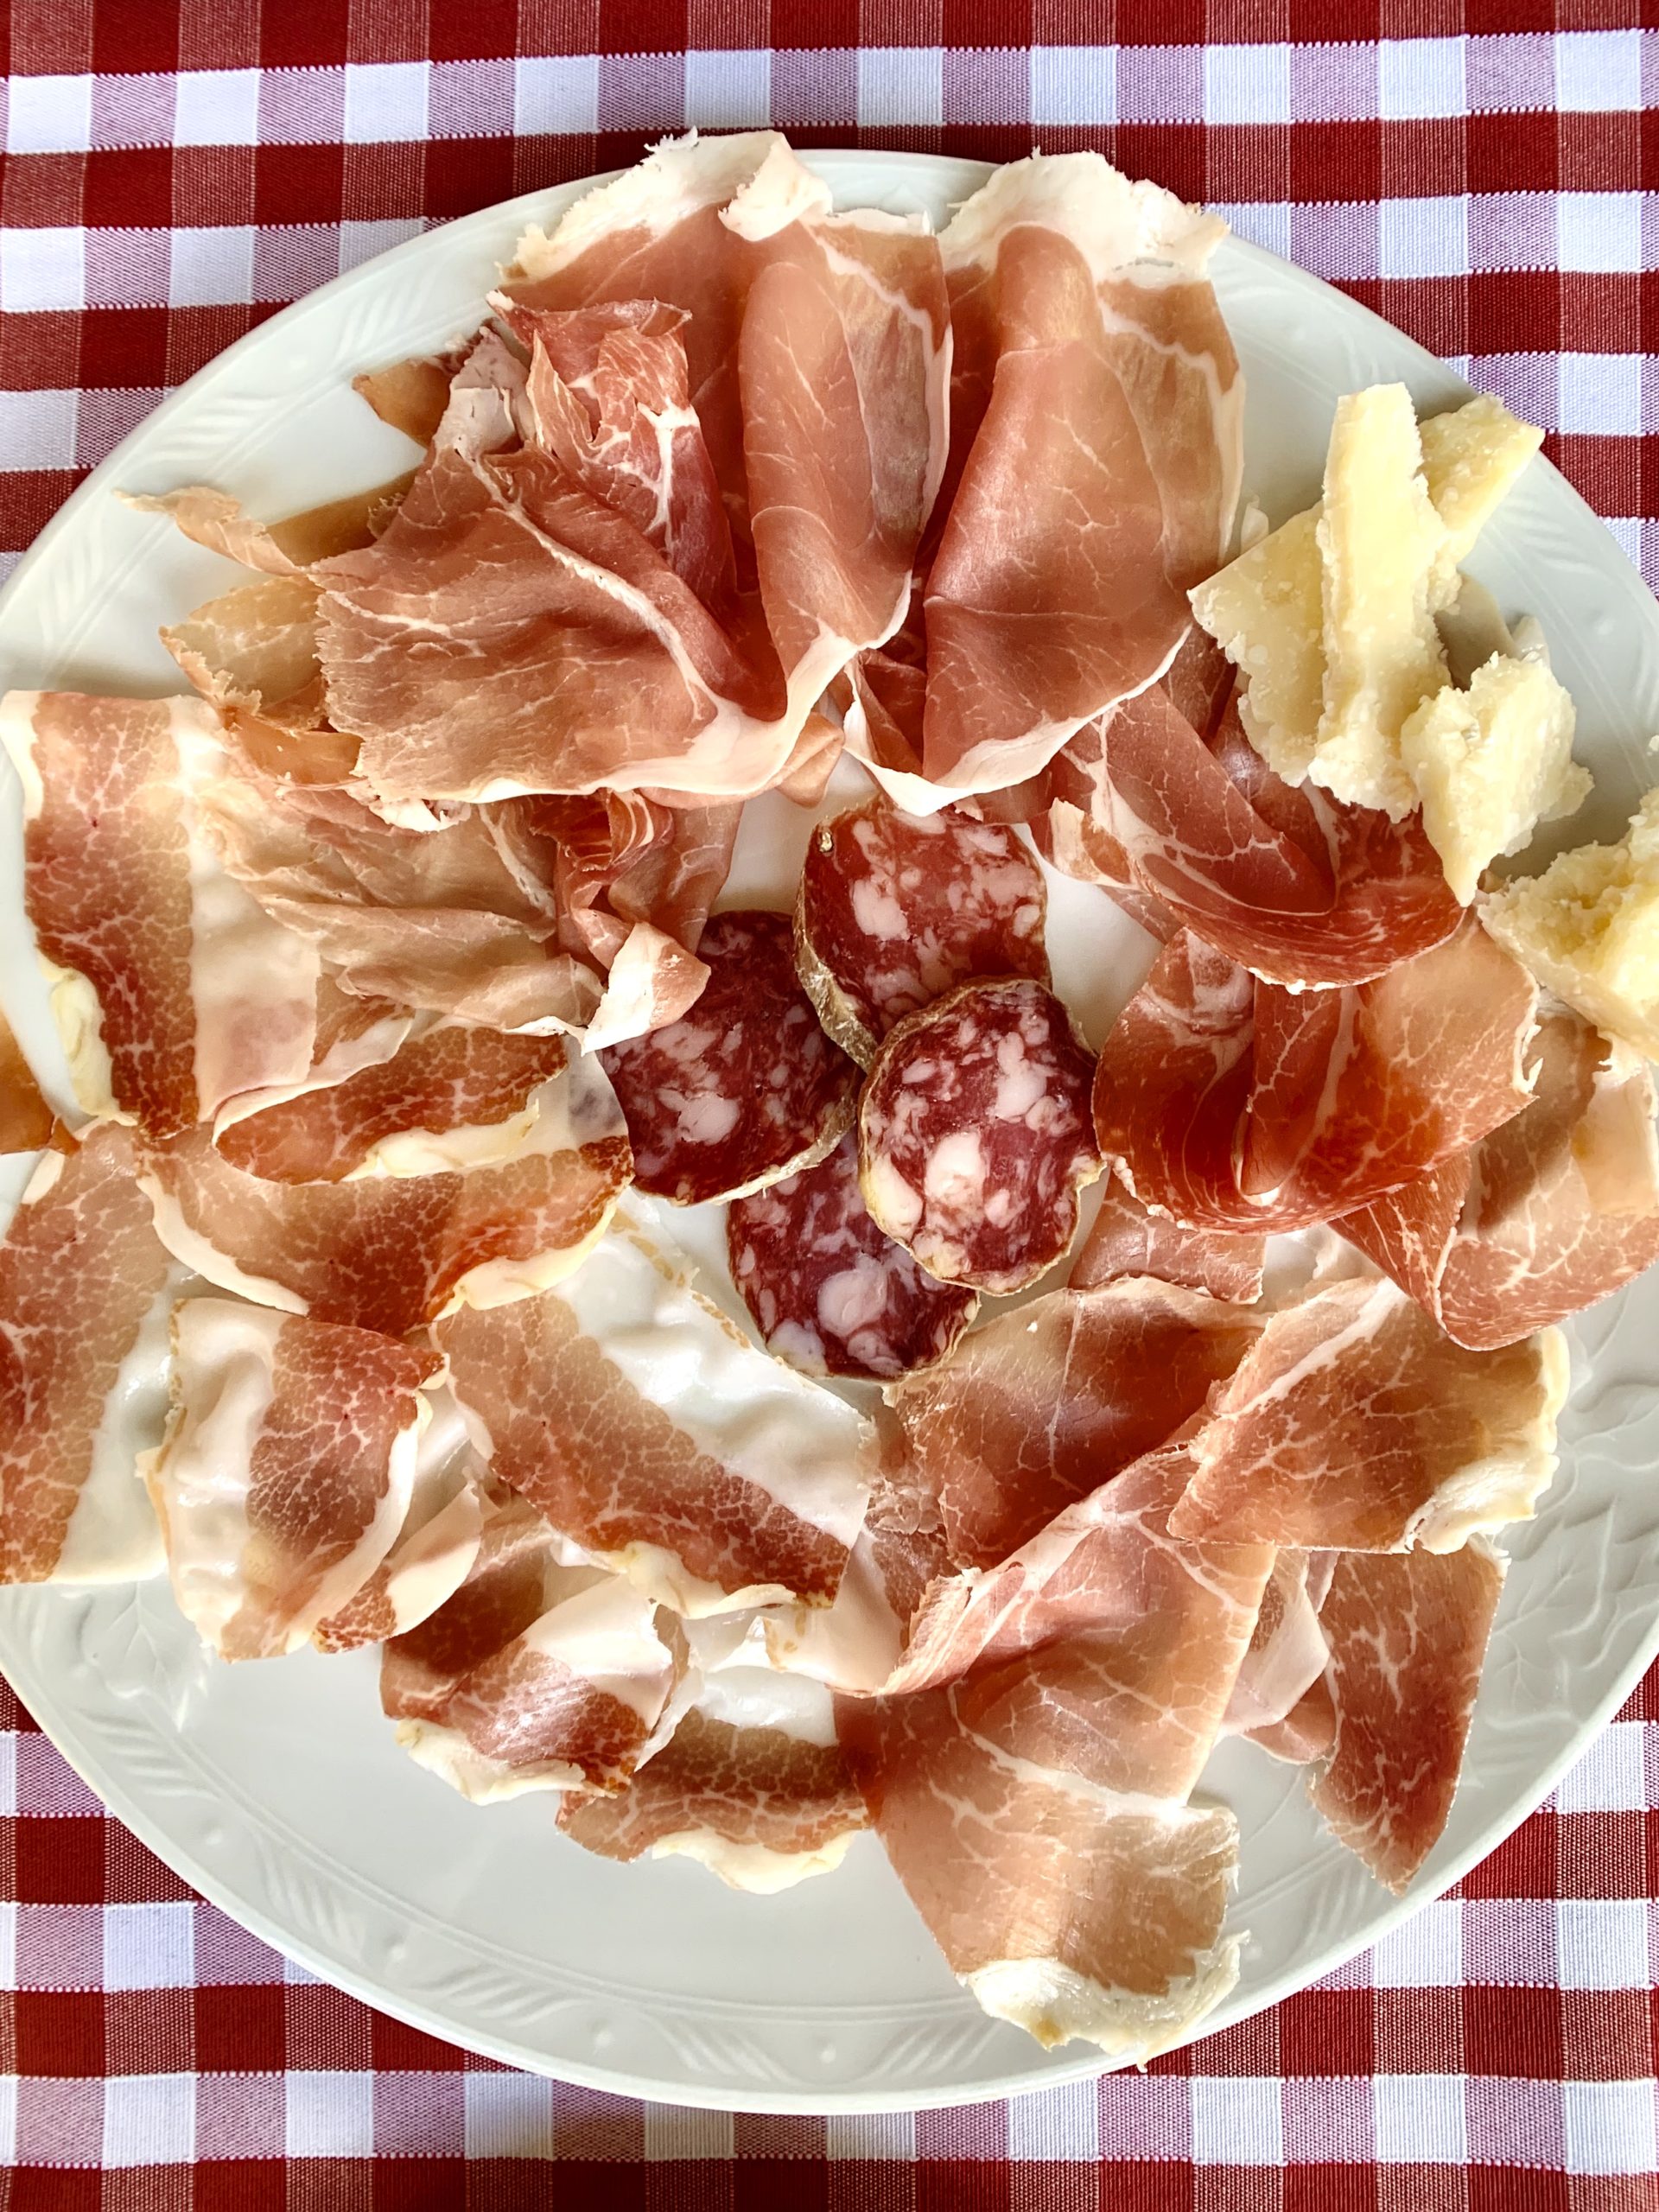 Platter of meats at Lucanda del Culatello restaurant in Parma, Italy